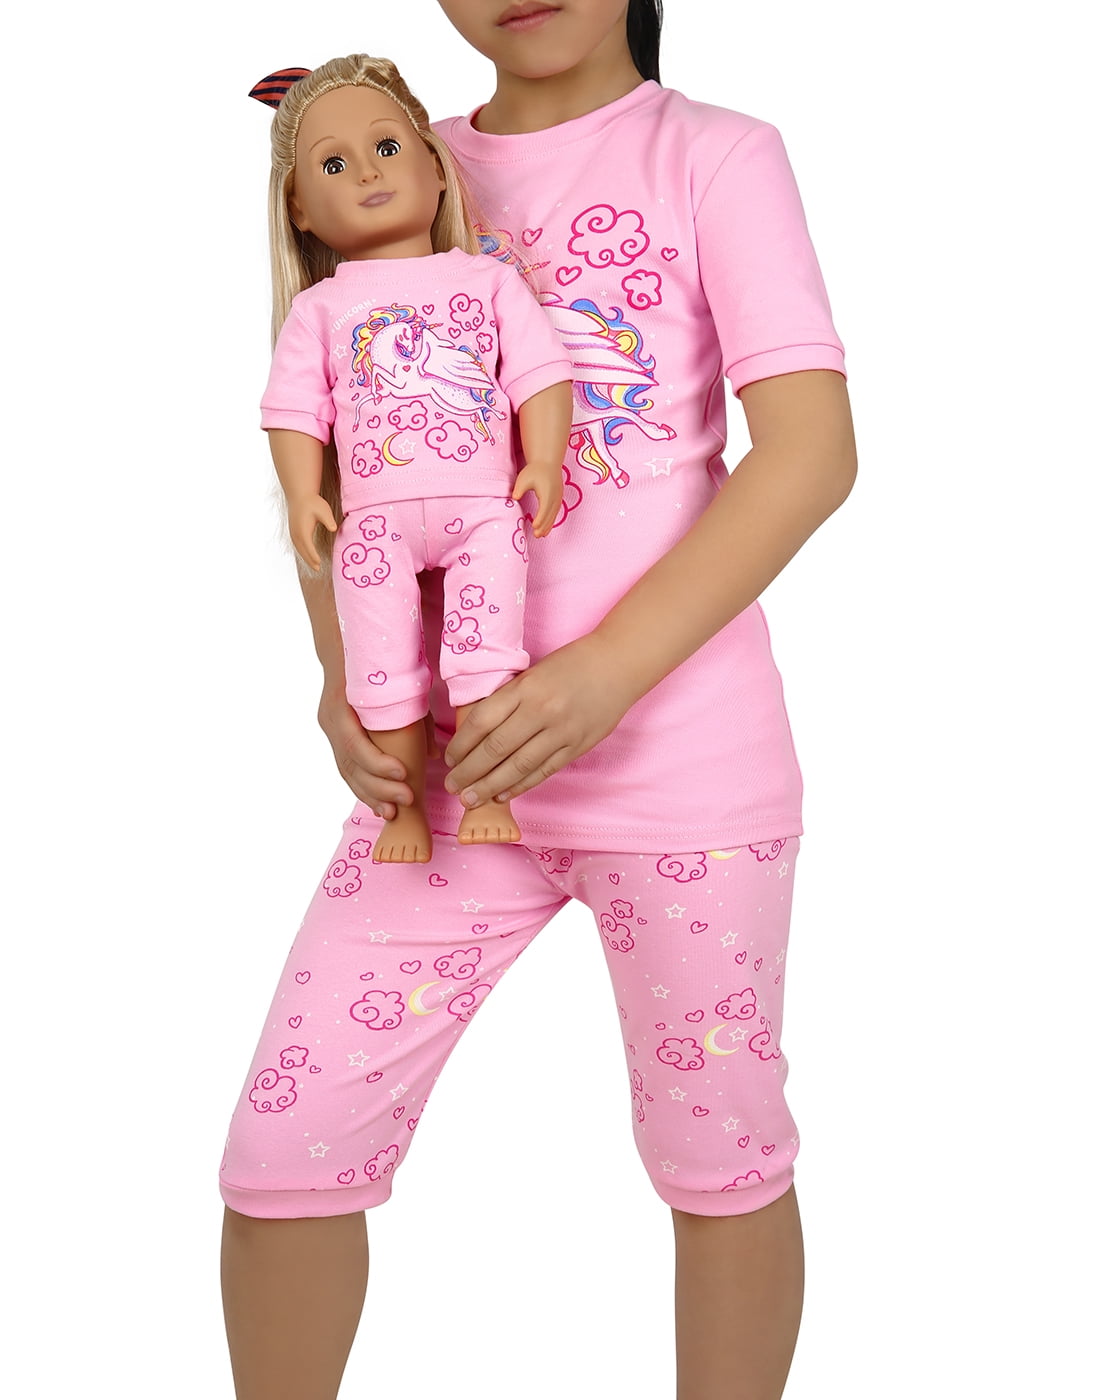 Berry Long Sleeve Dress Leggings 2pc Set Fits 18 inch American Girl Dolls 